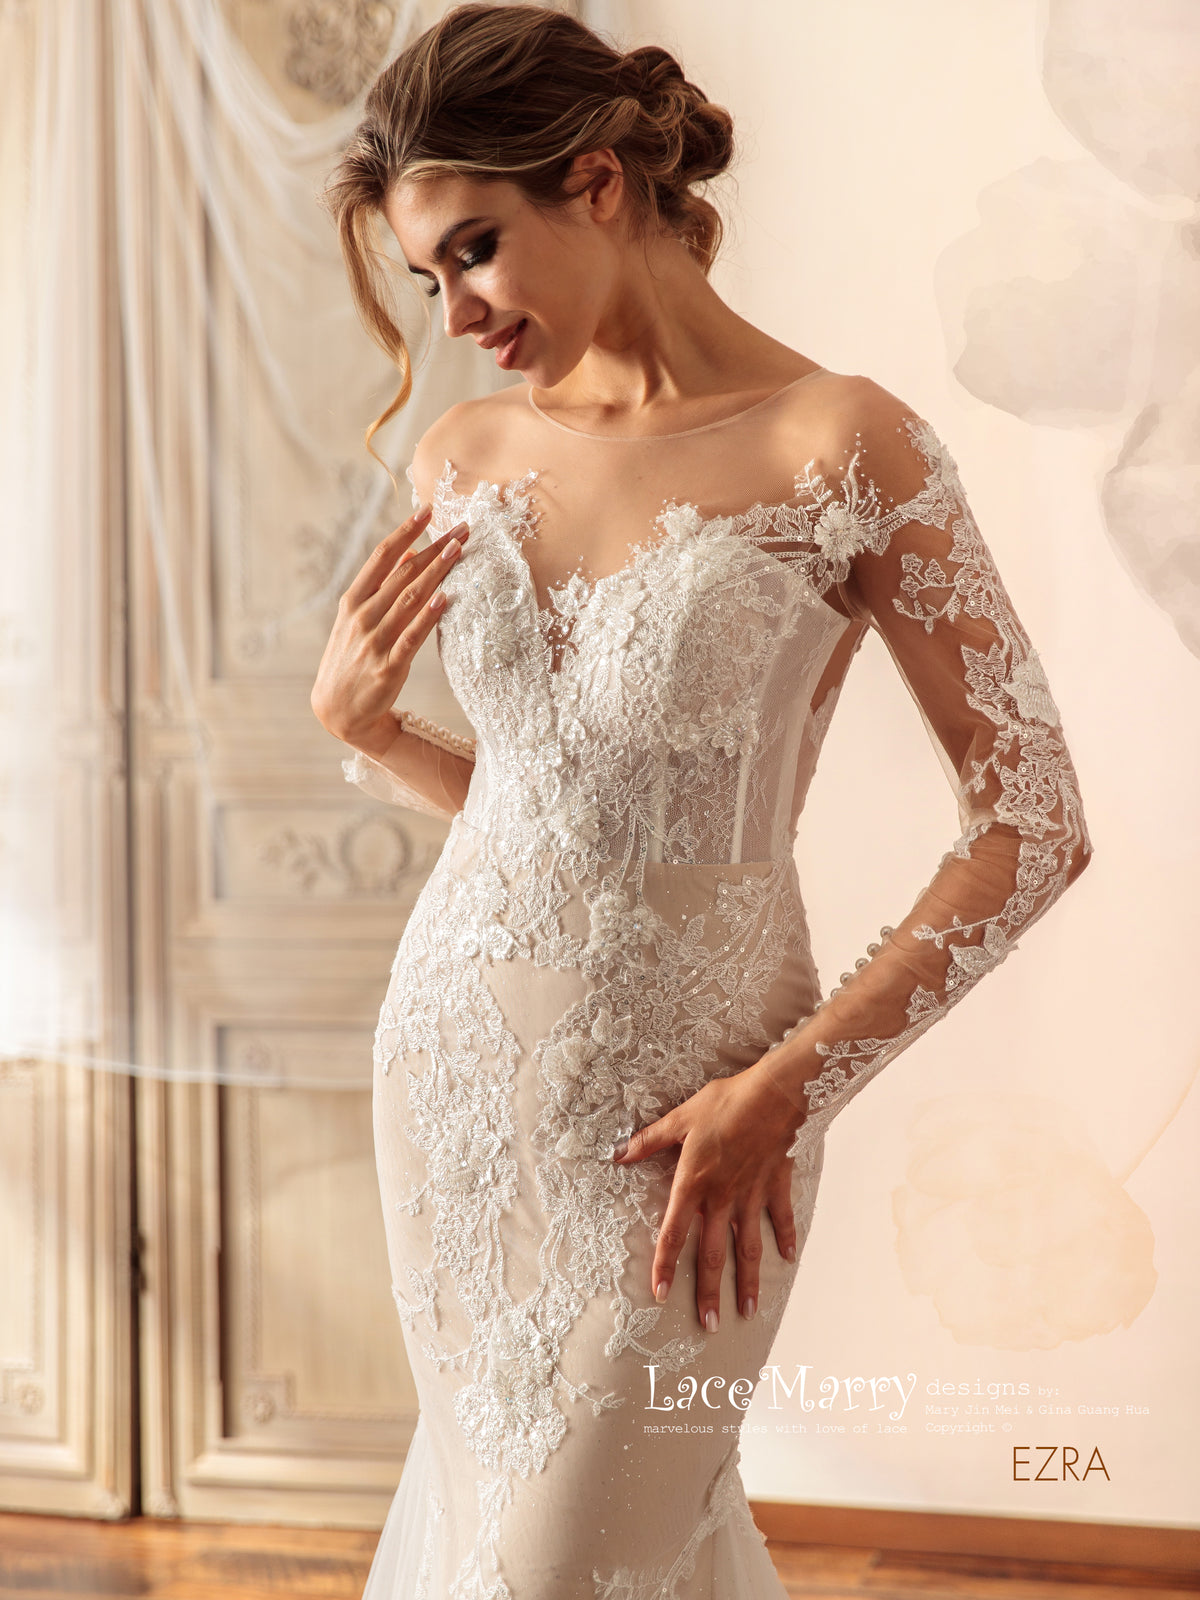 EZRA / Exclusive Lace Wedding Dress with Illusion Neckline